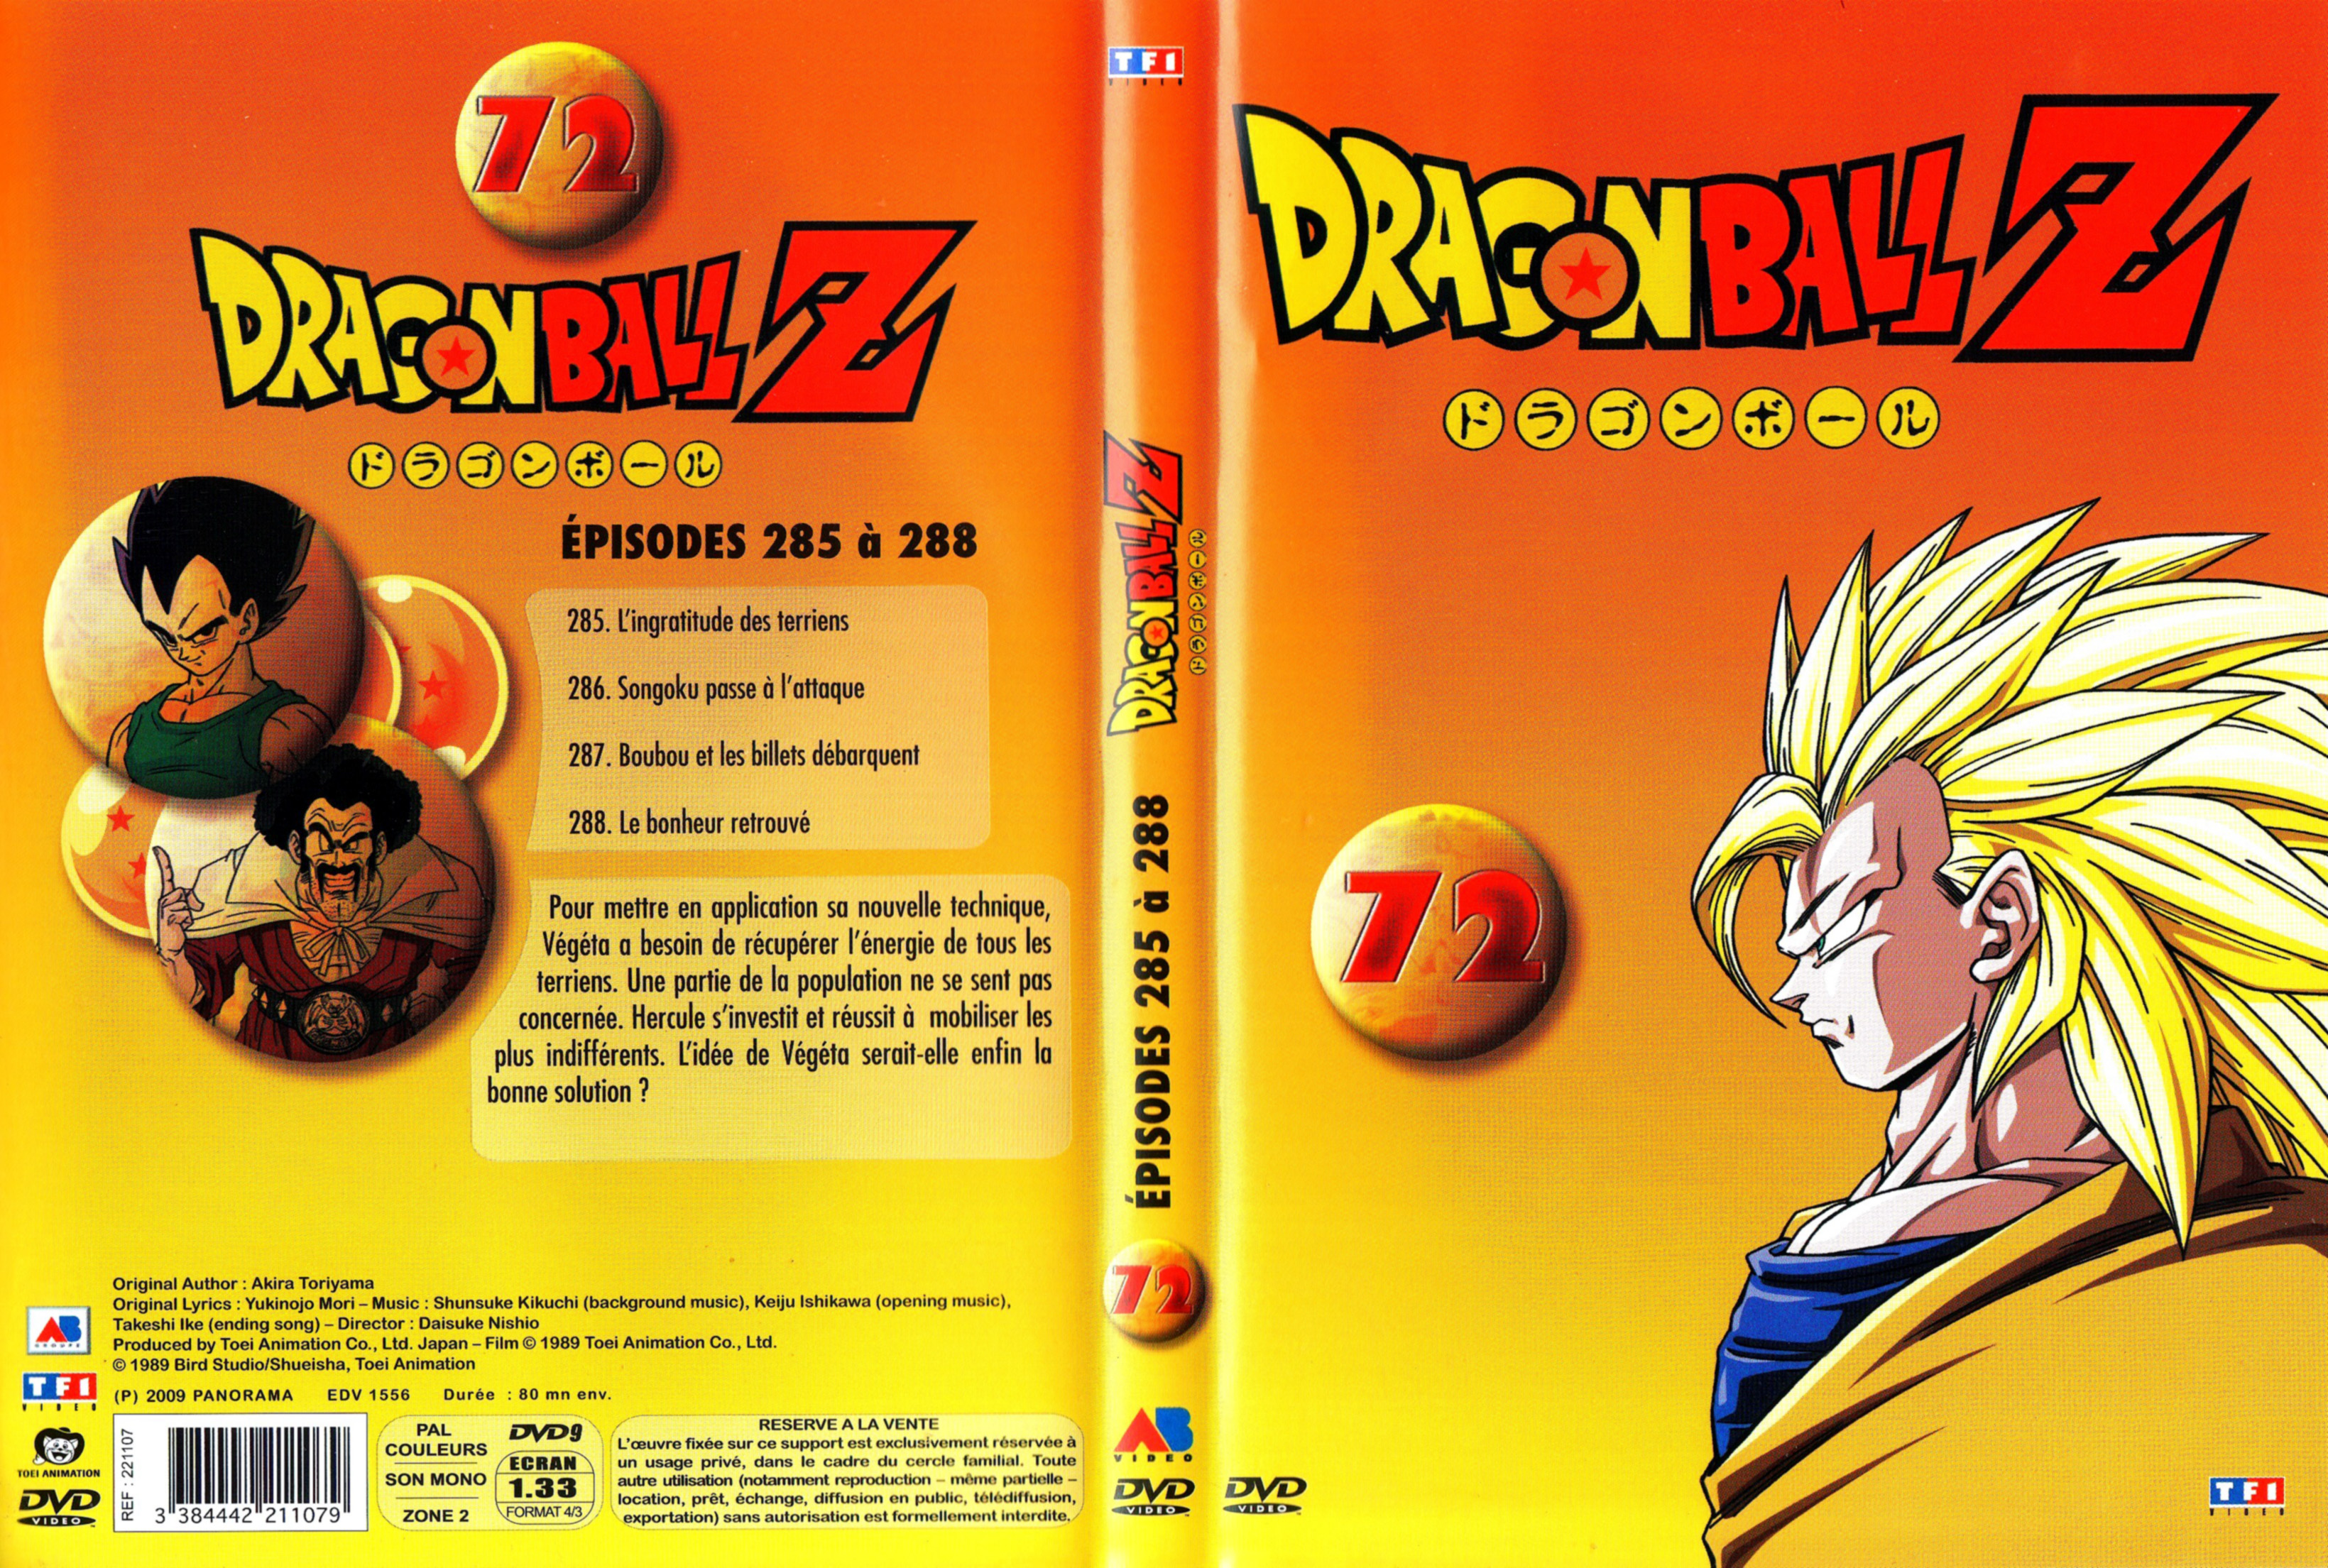 Jaquette DVD Dragon Ball Z vol 72